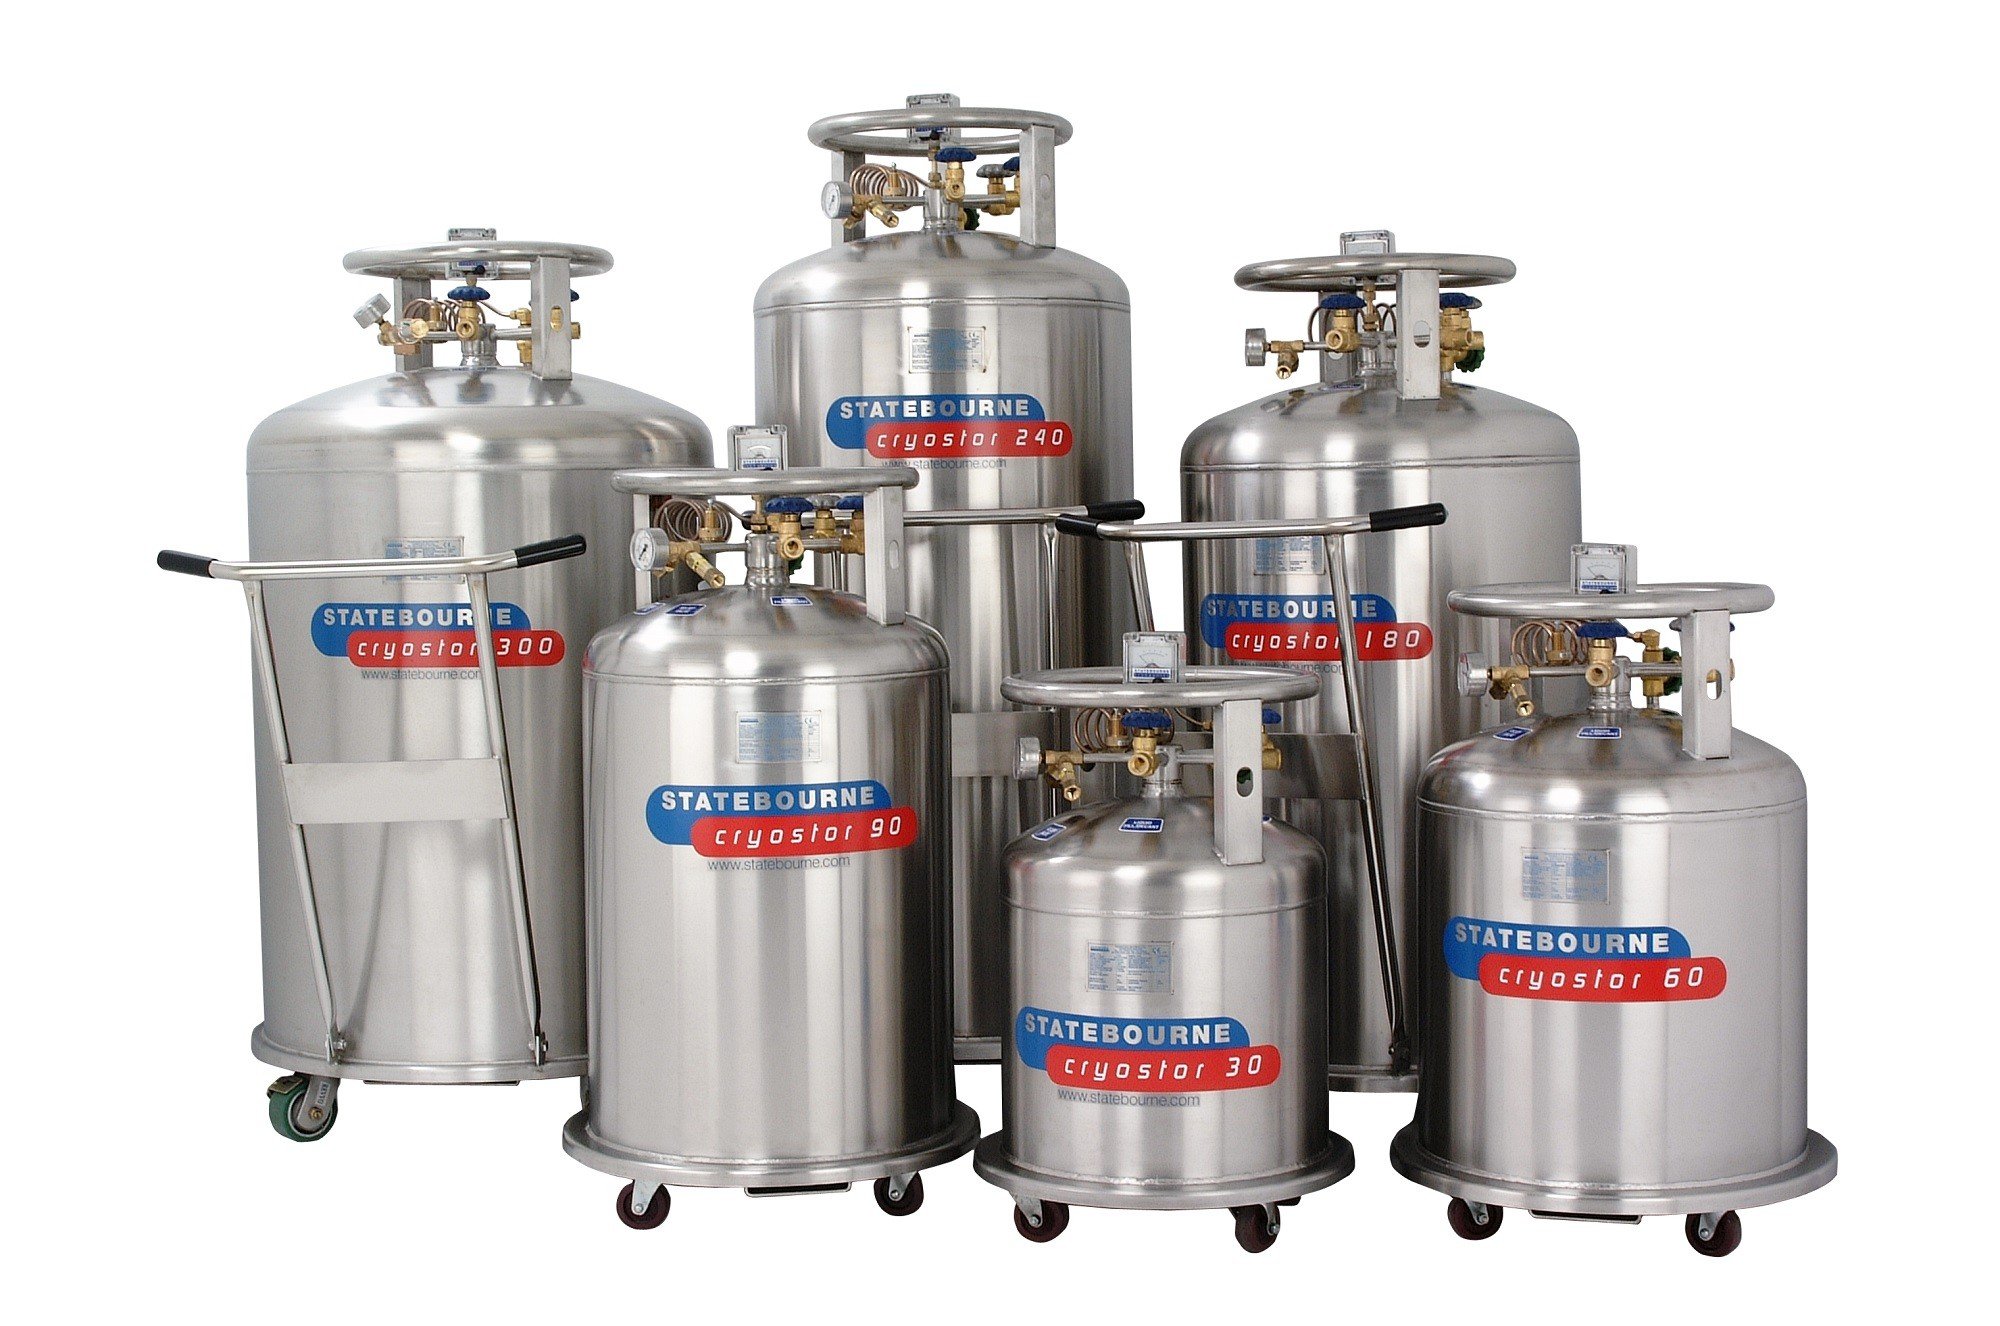 Statebourne Cryogenics 9911025 Cryostor 30 Stainless Steel Cylinders - Low Pressure LN2 Dewars 30 Litres for storage and dispensing liquid nitrogen